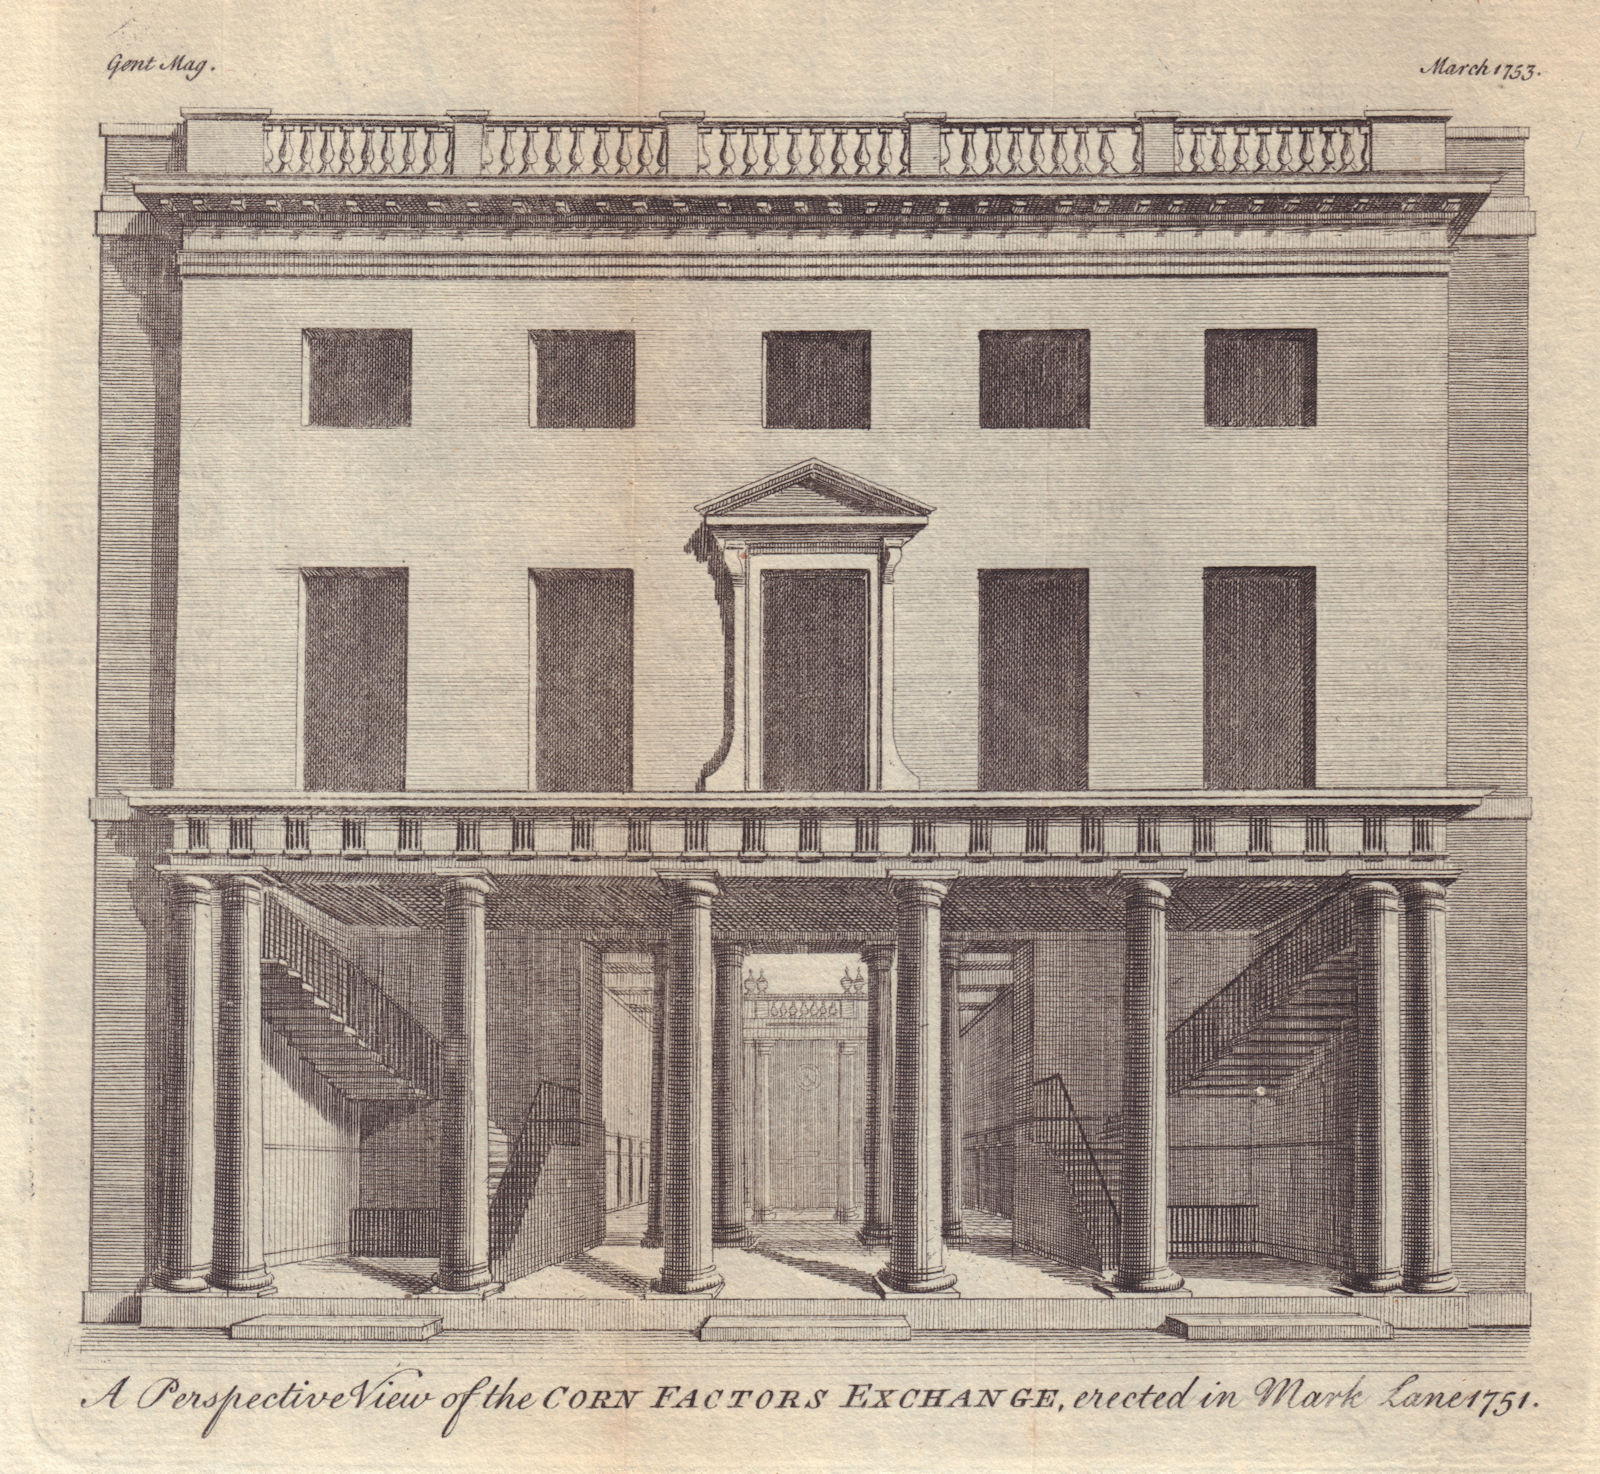 Associate Product The Corn Factors Exchange, erected in Mark Lane 1751. London 1753 old print